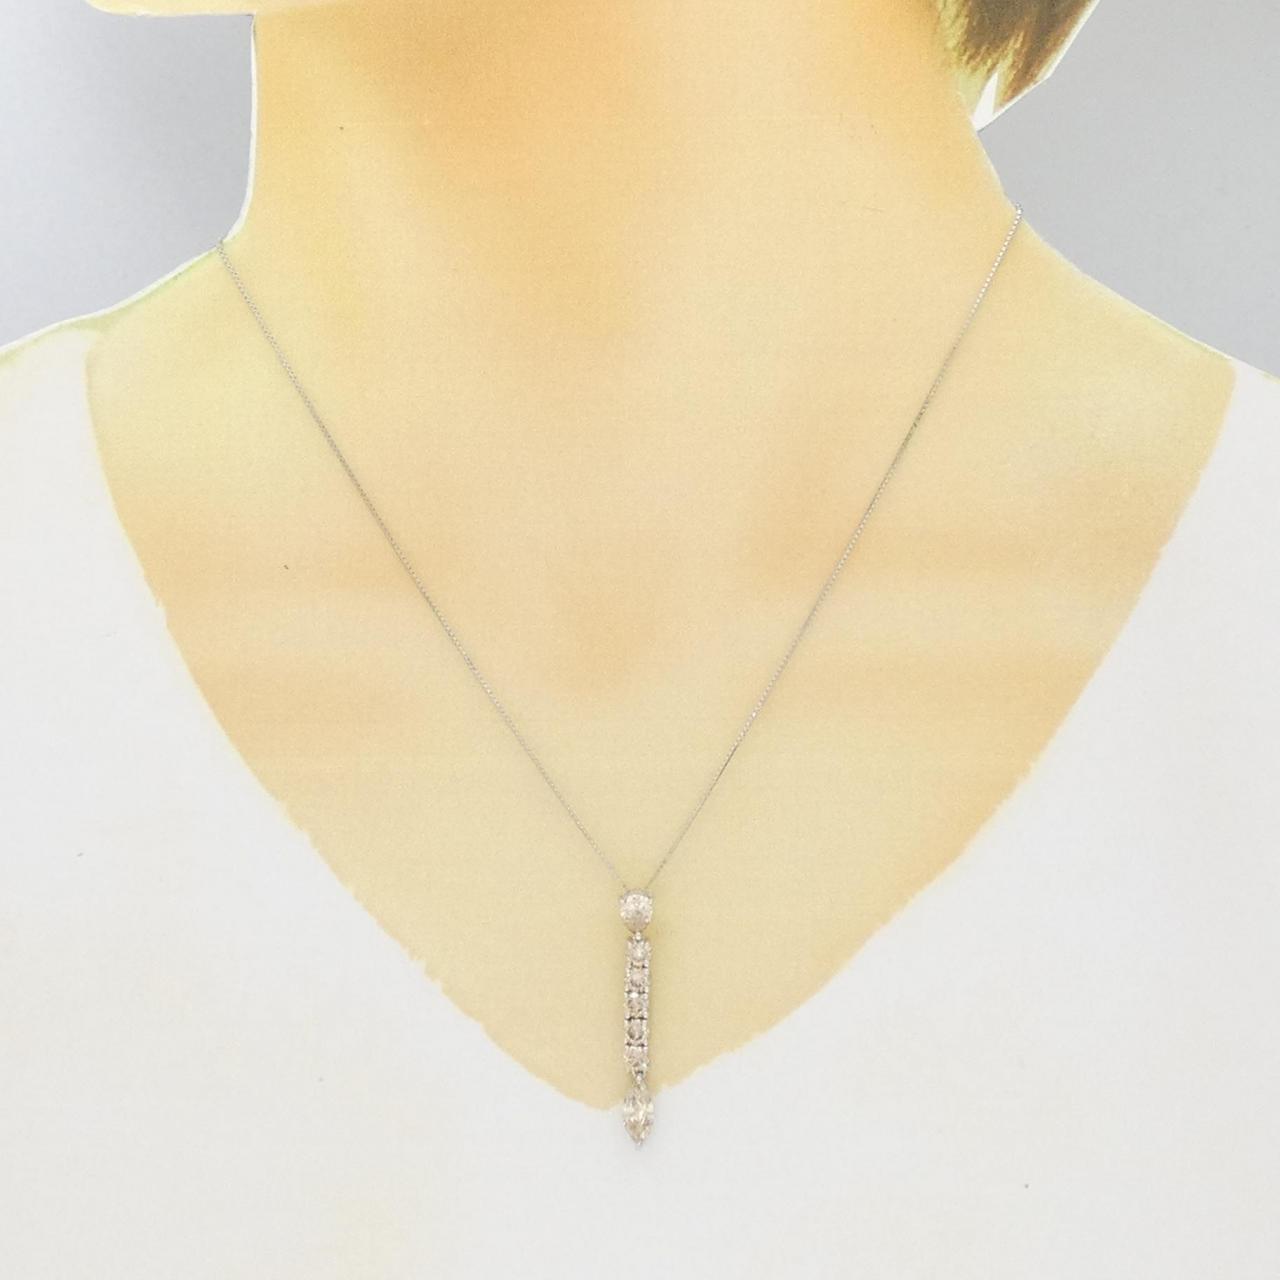 750WG/K18WG Diamond necklace 2.32CT